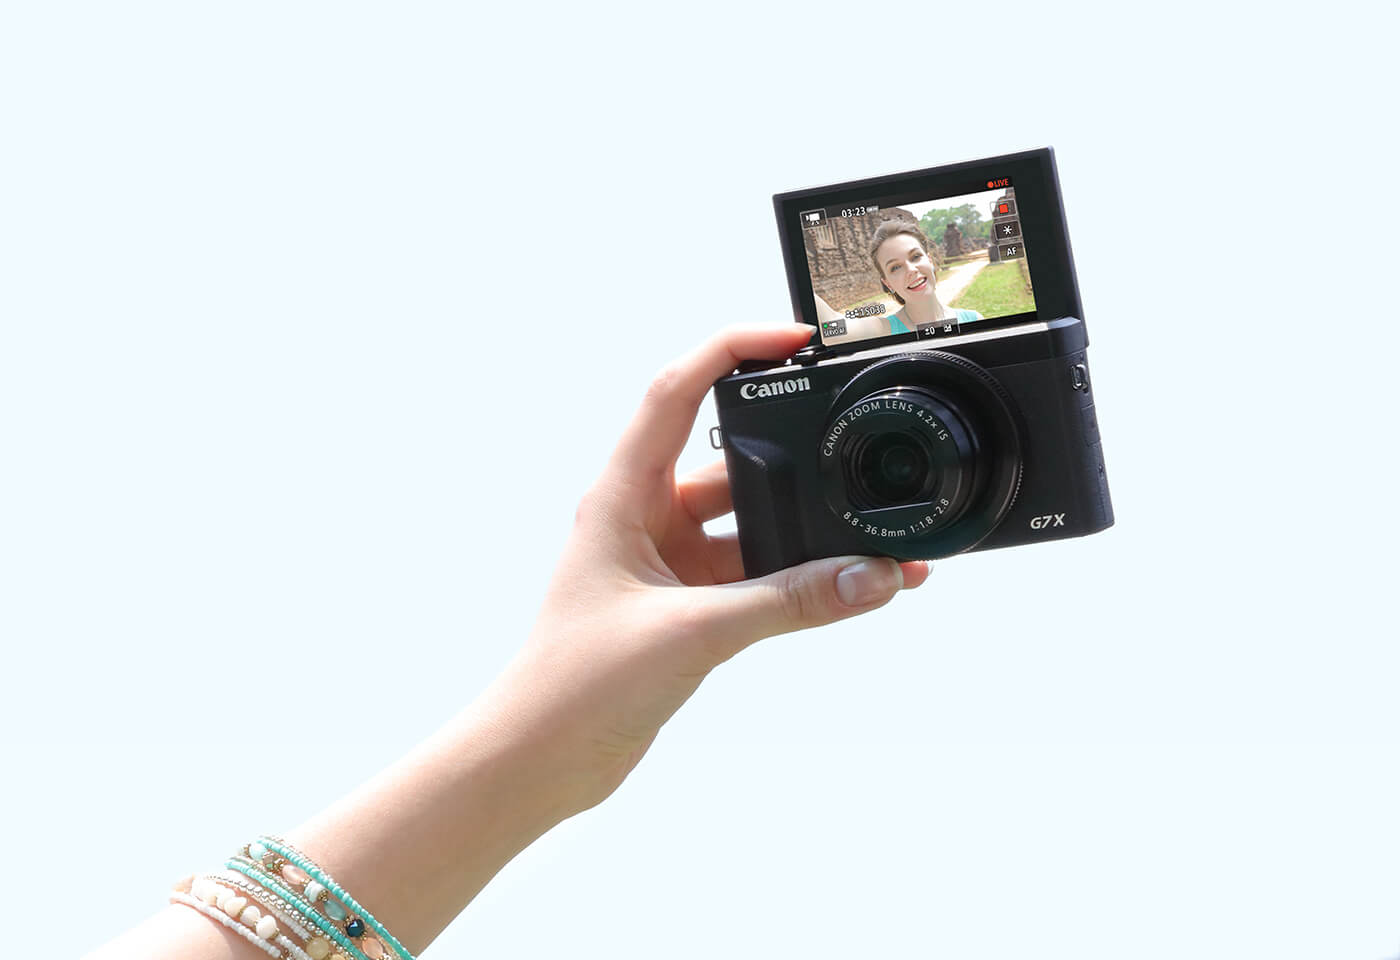 PowerShot G7 X Mark III - The Vloggers Camera